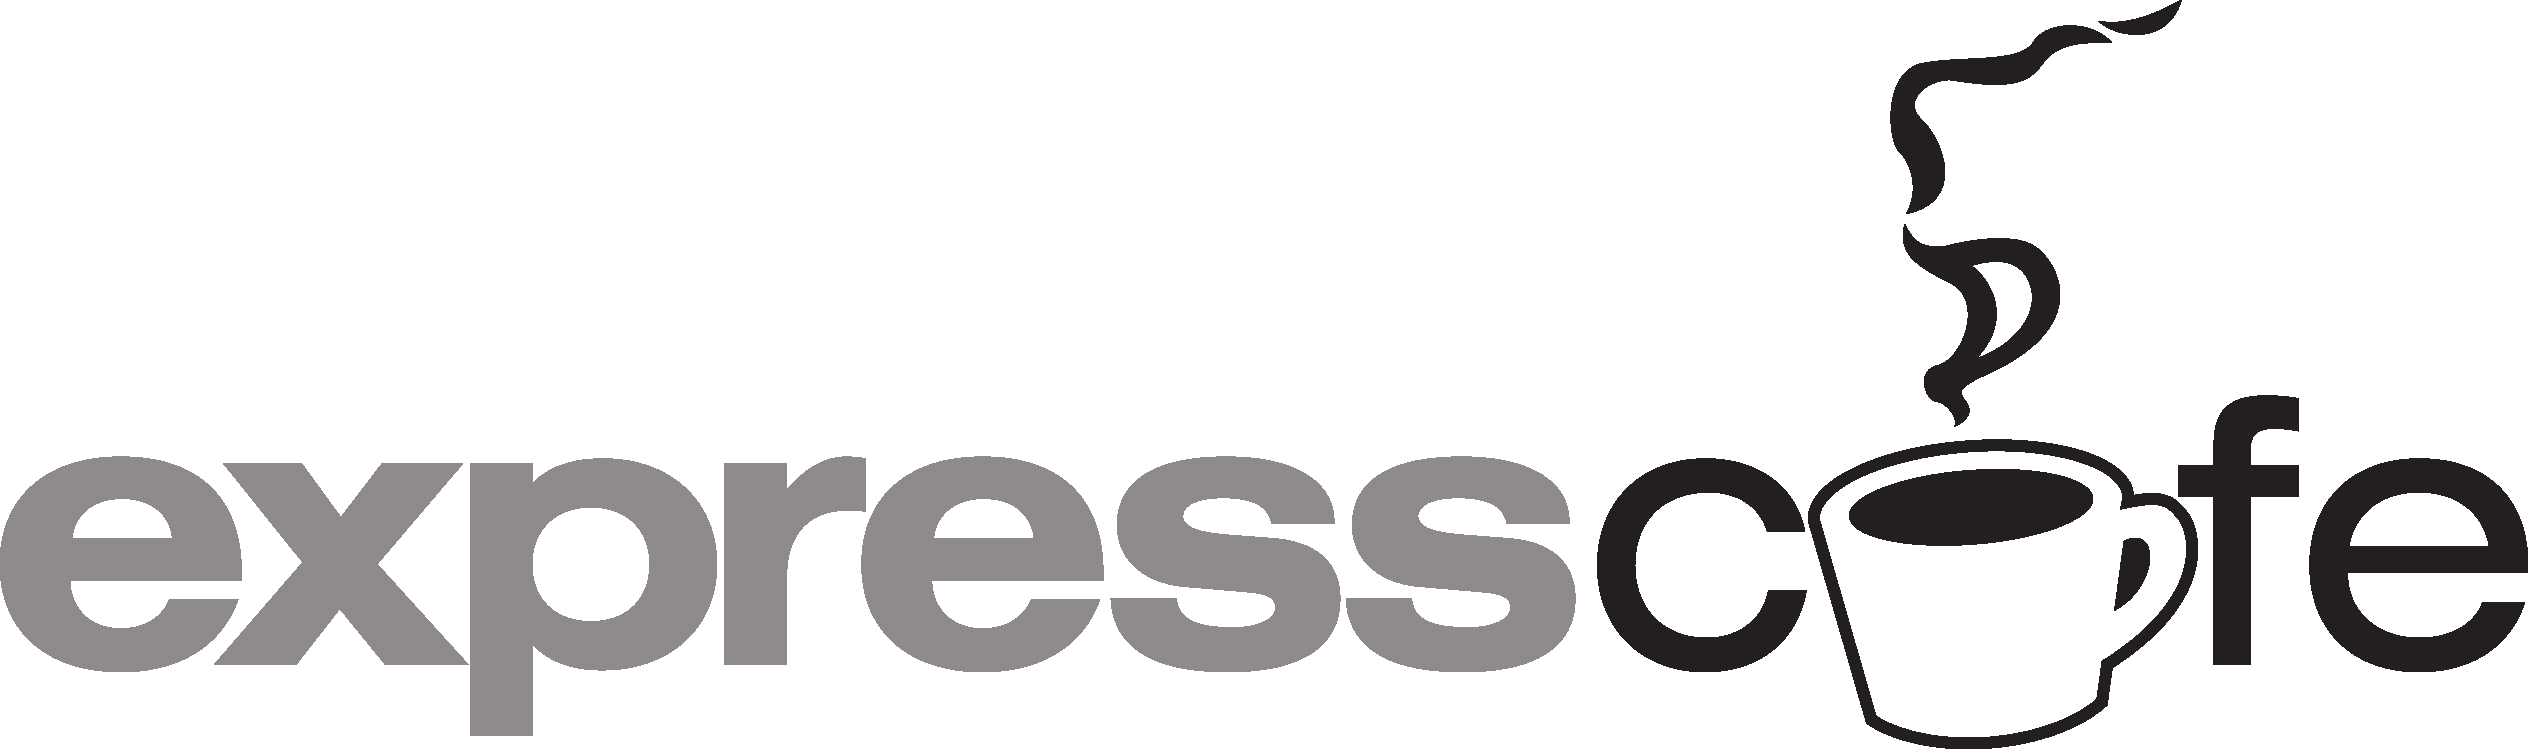 Cafe express logo